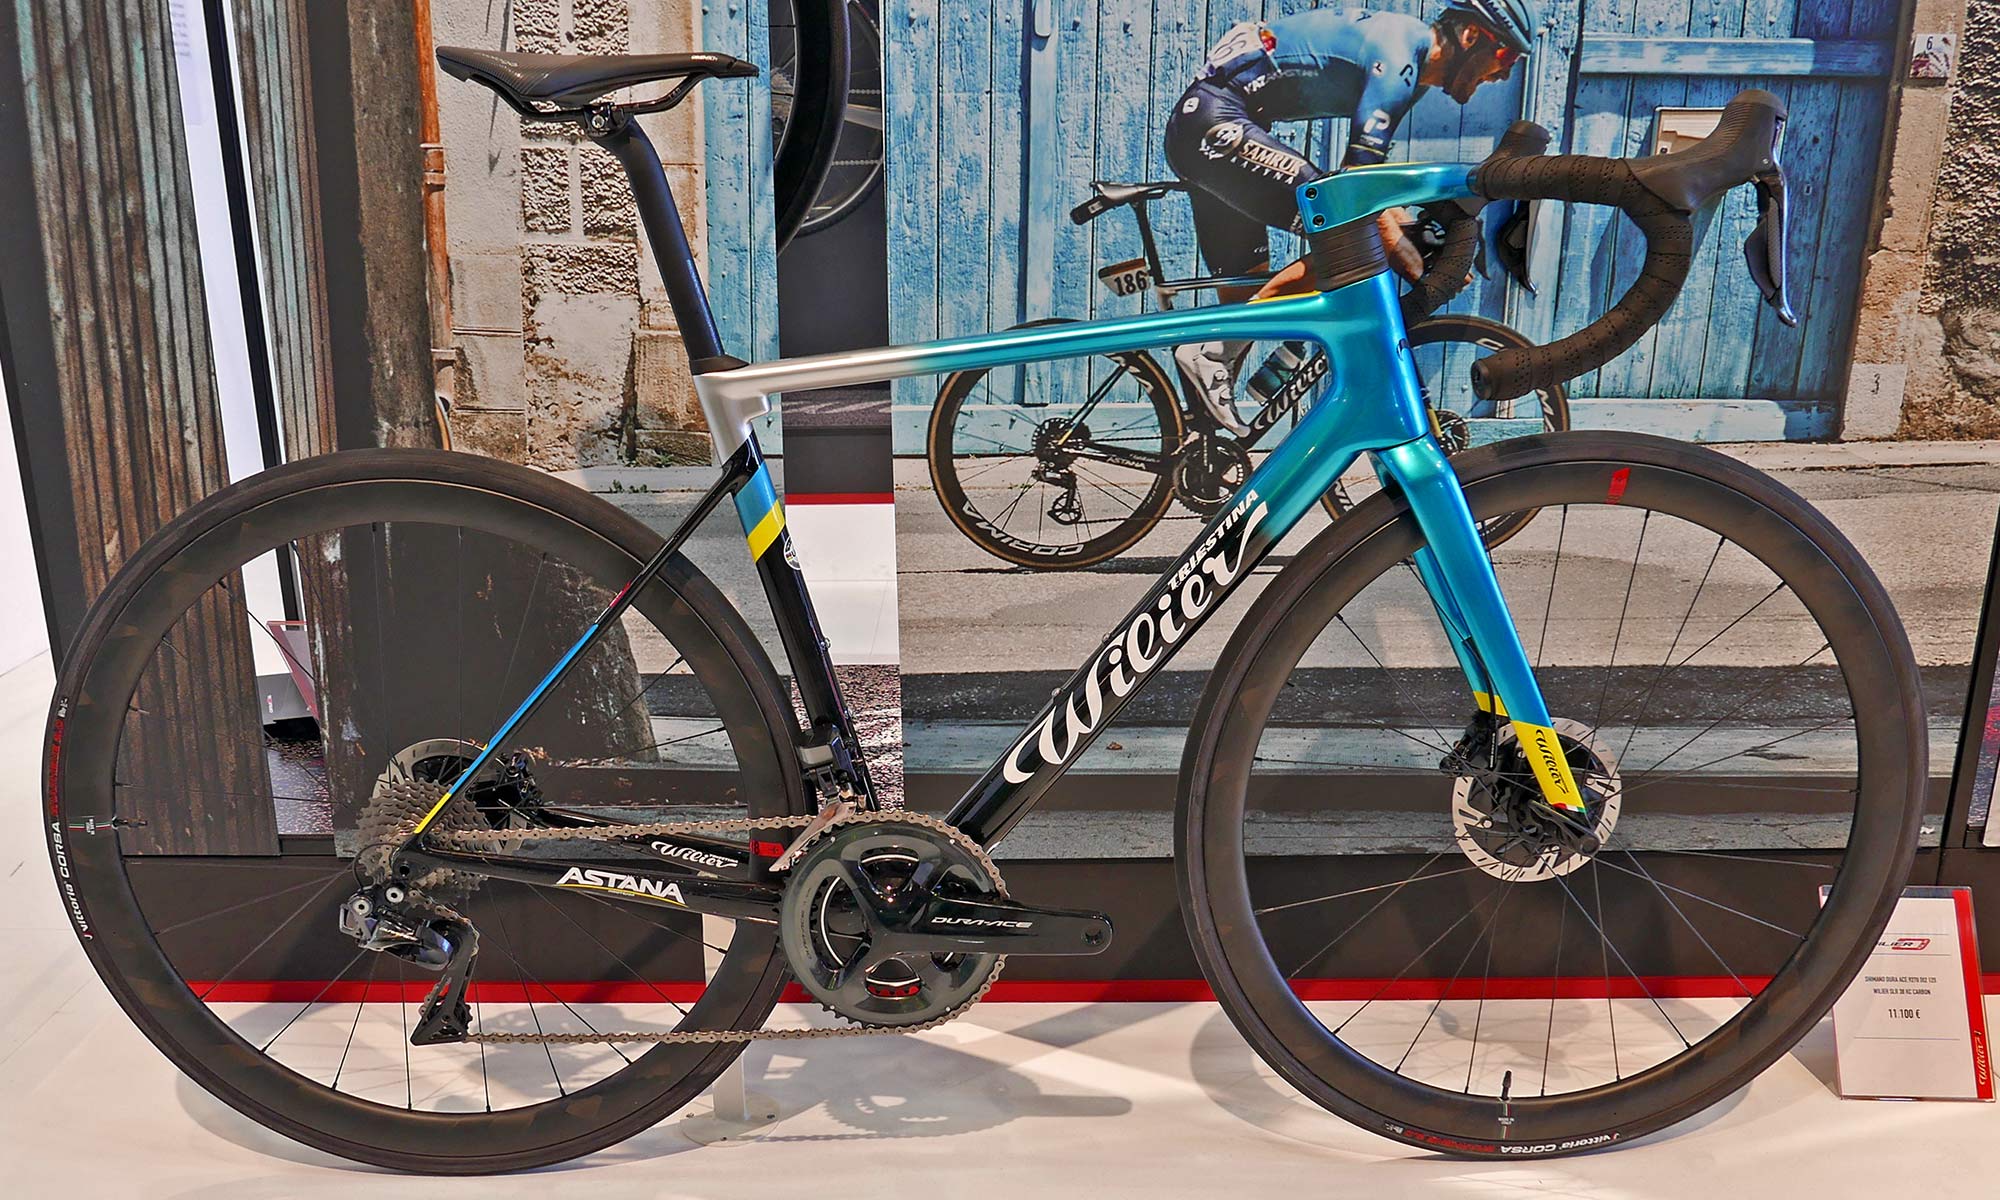 Wilier 0 SLR lightweight carbon all-rounder road race bike, Astana